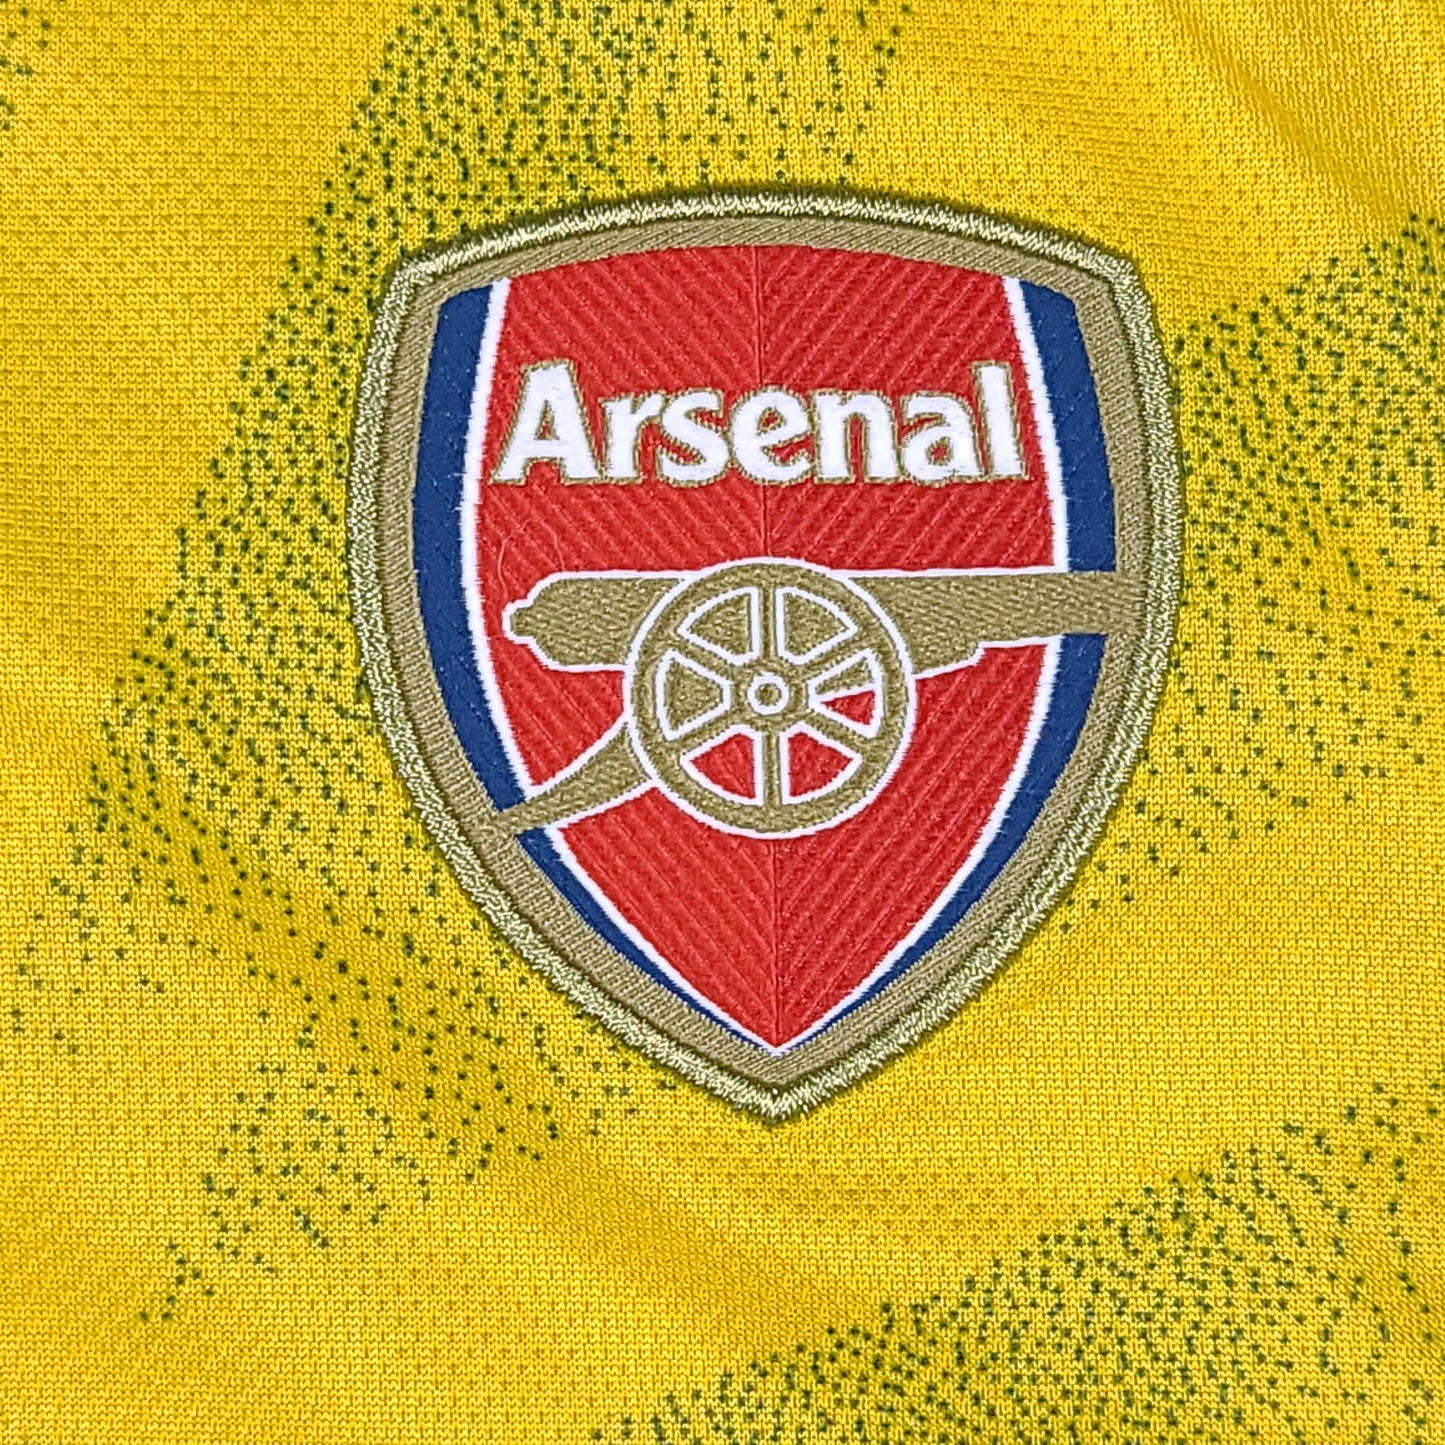 Arsenal Yellow 2019-20 adidas Away Youth Soccer Jersey